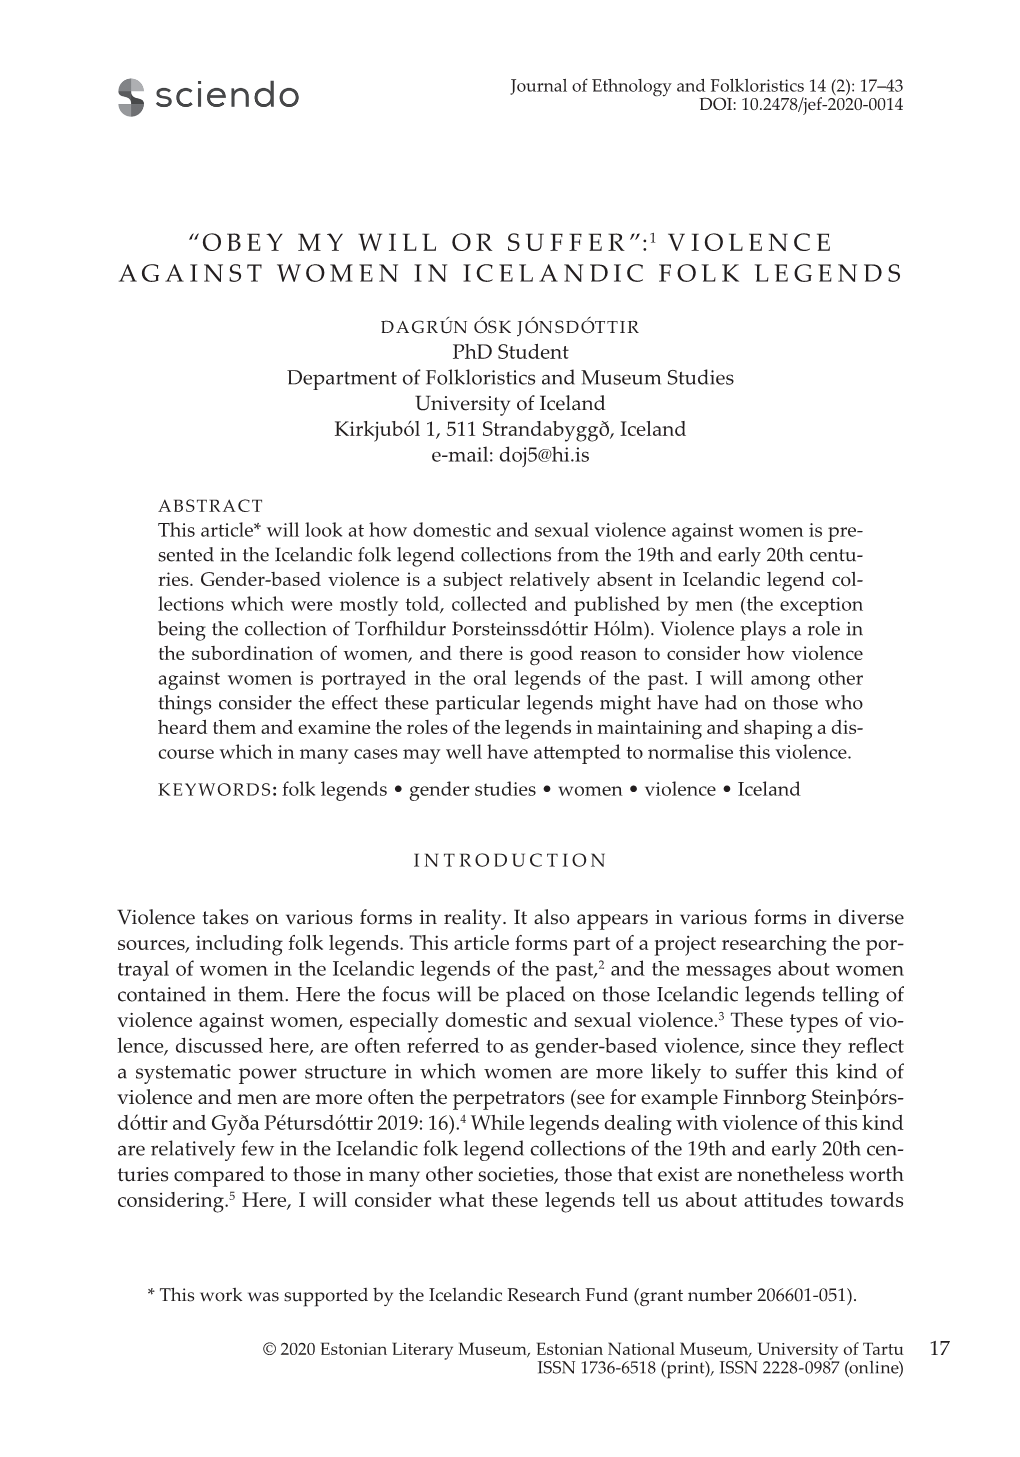 1 Violence Against Women in Icelandic Folk Legends